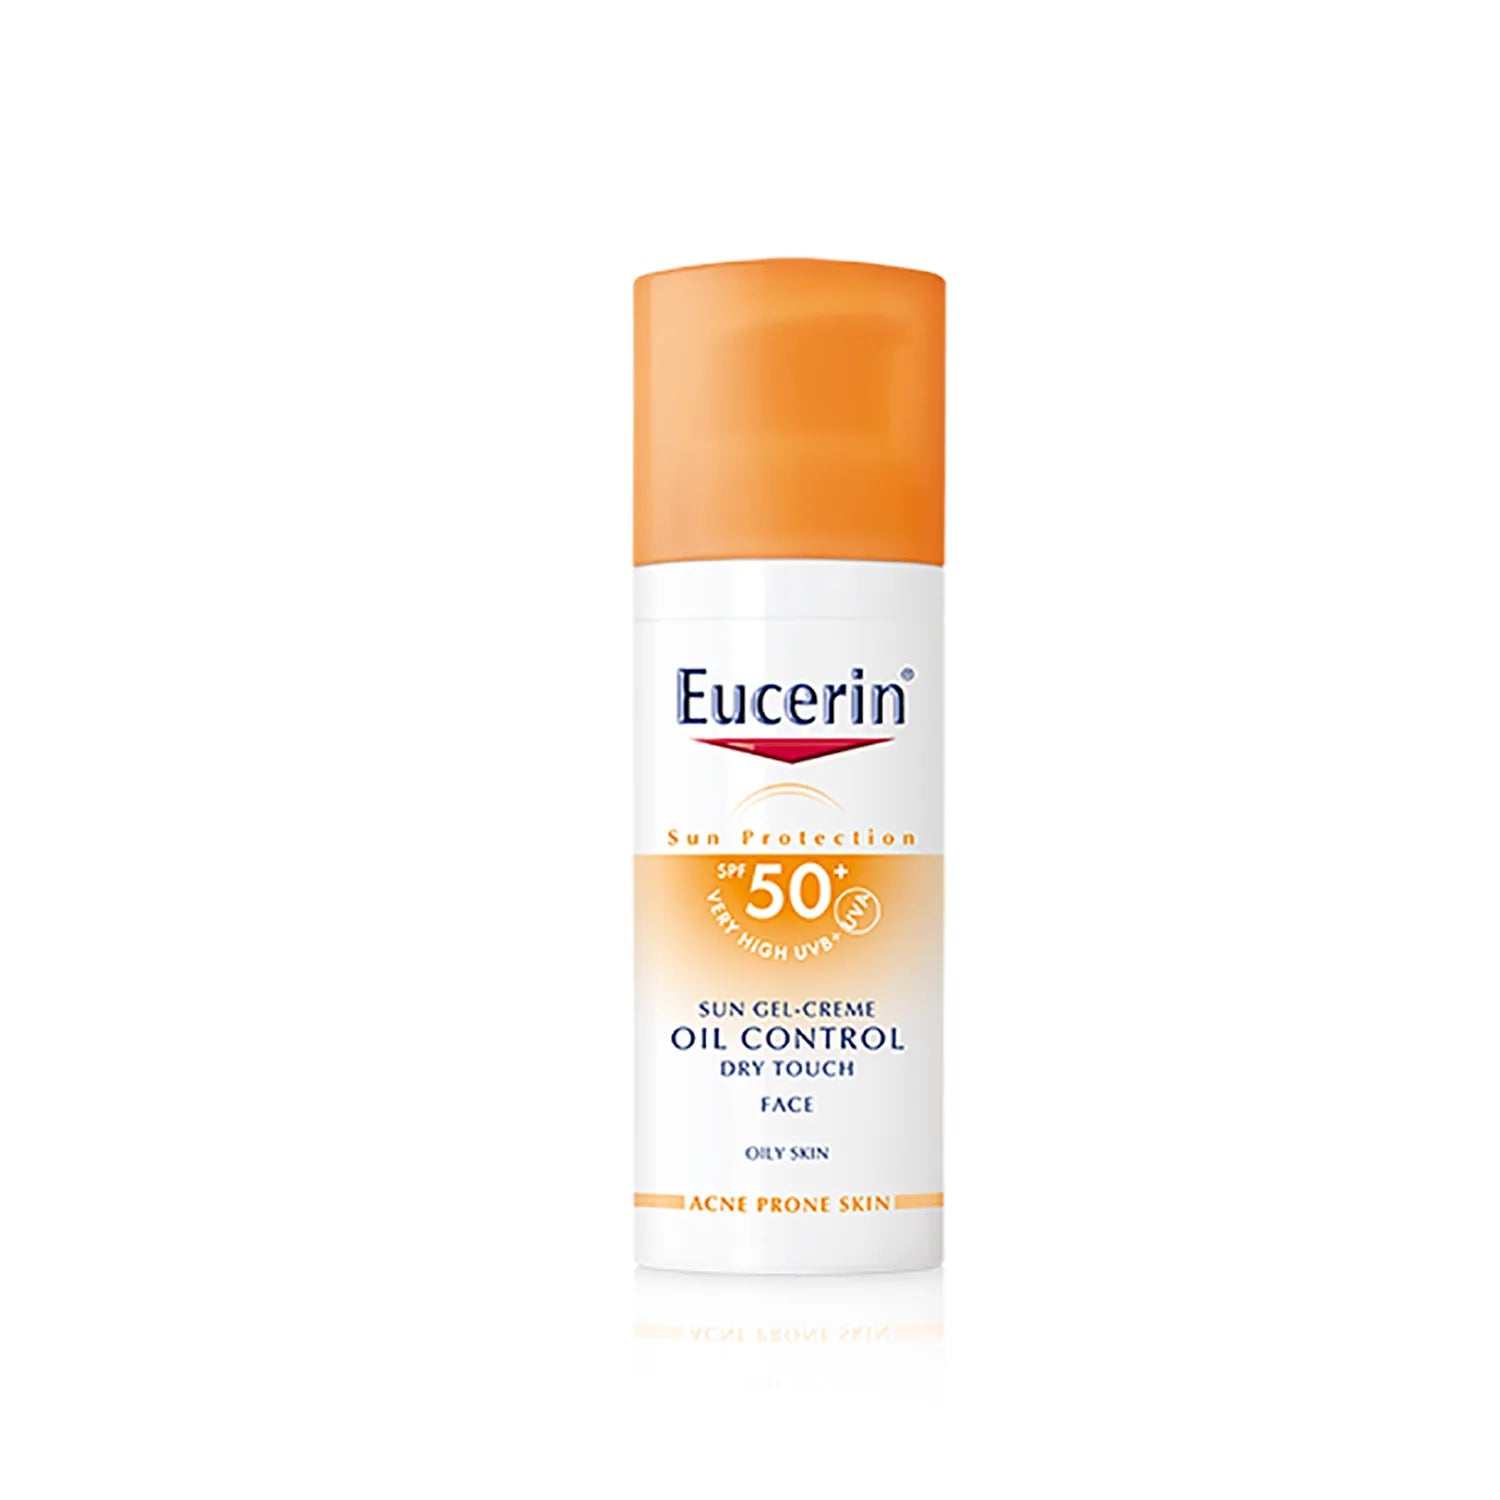 Eucerin Sun Gel-Crème Oil Control Dry Touch 50+ 50mL in Oman